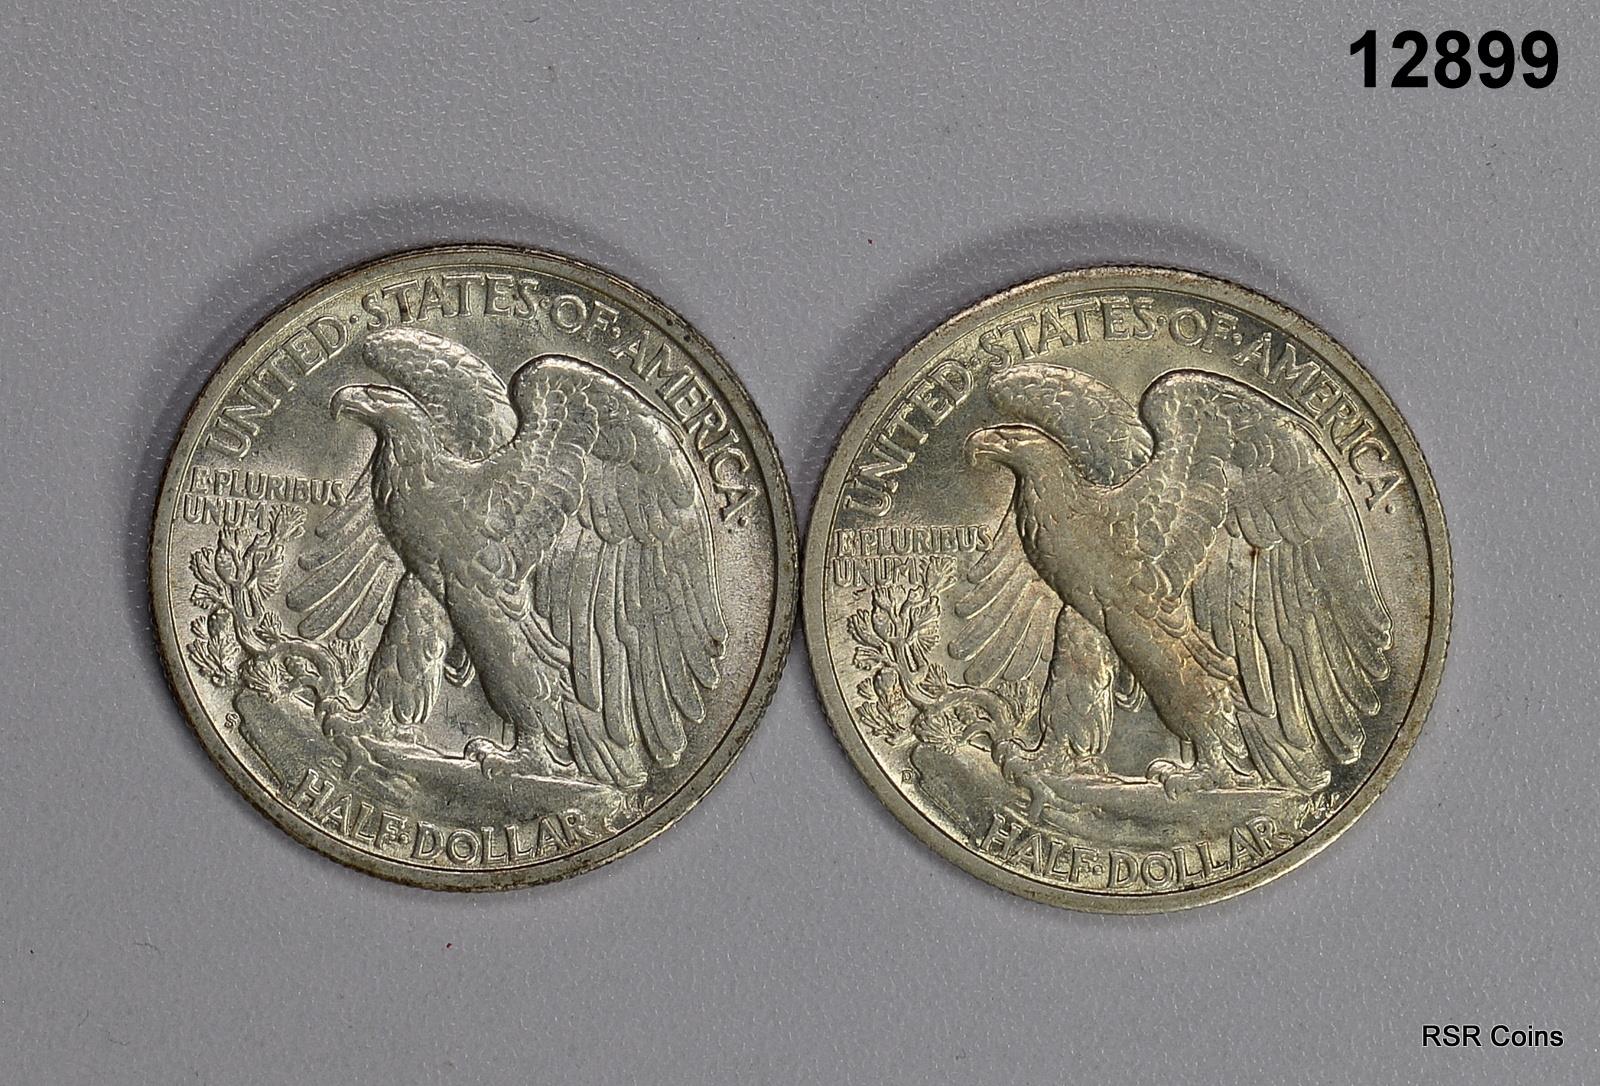 2 COIN LOT: 1945 D & S WALKING LIBERTY HALF AU++ #12899